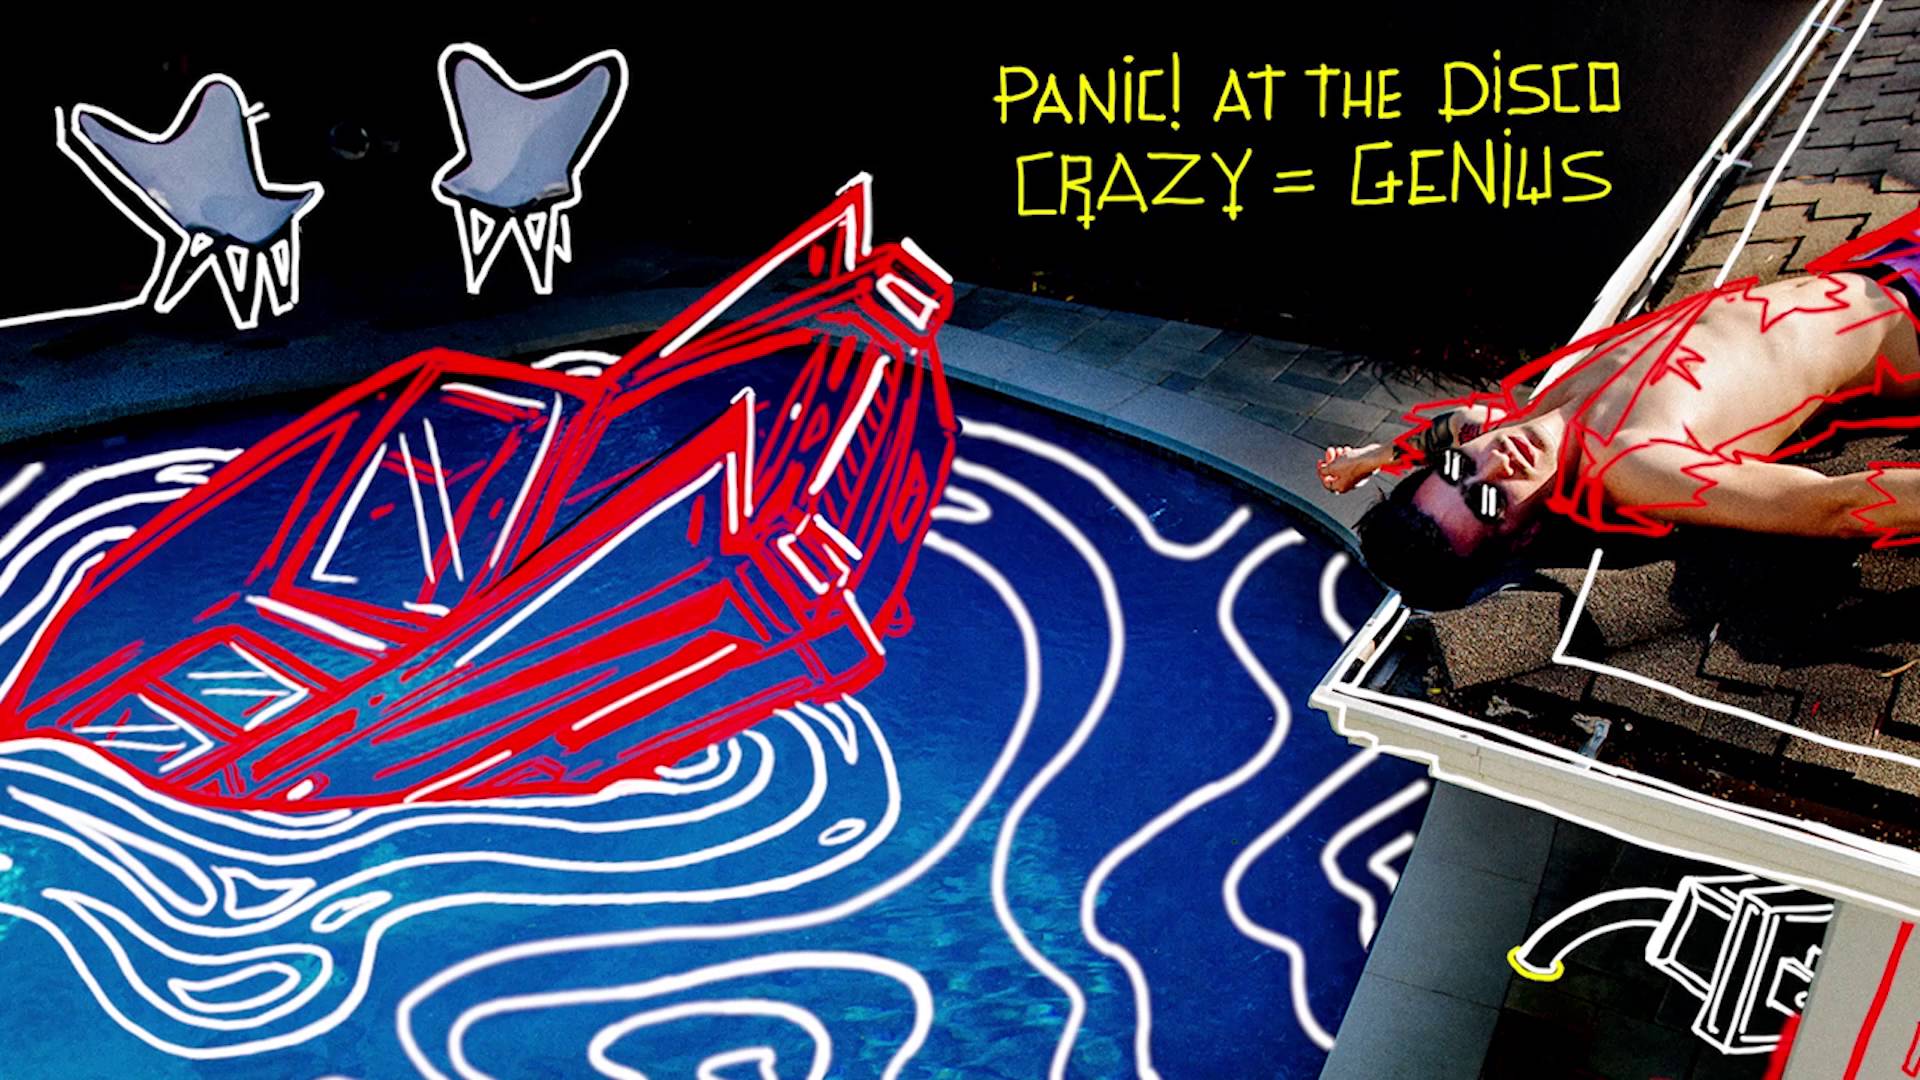 Panic At The Disco pics and logo. Photo and image of Panic At